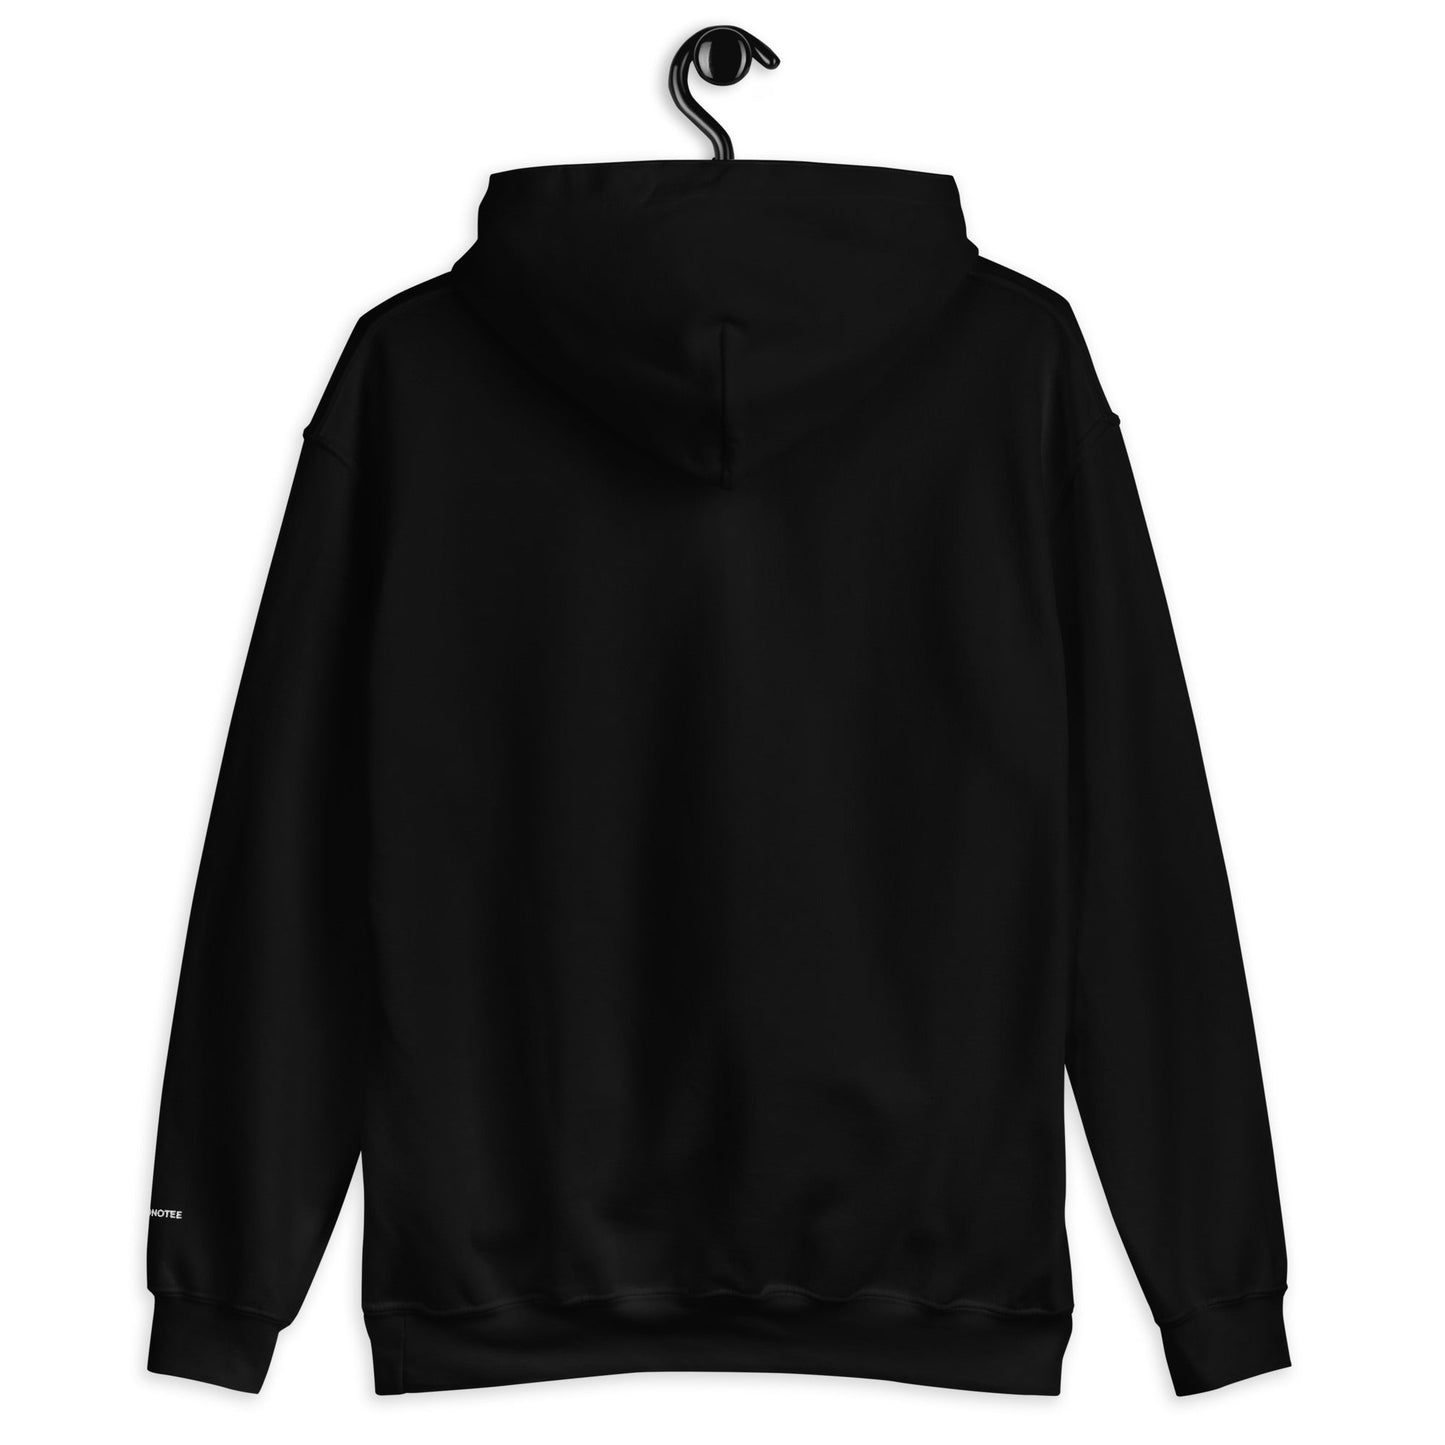 unisex-embroidery-fleece-hoodie-dead-pool-black